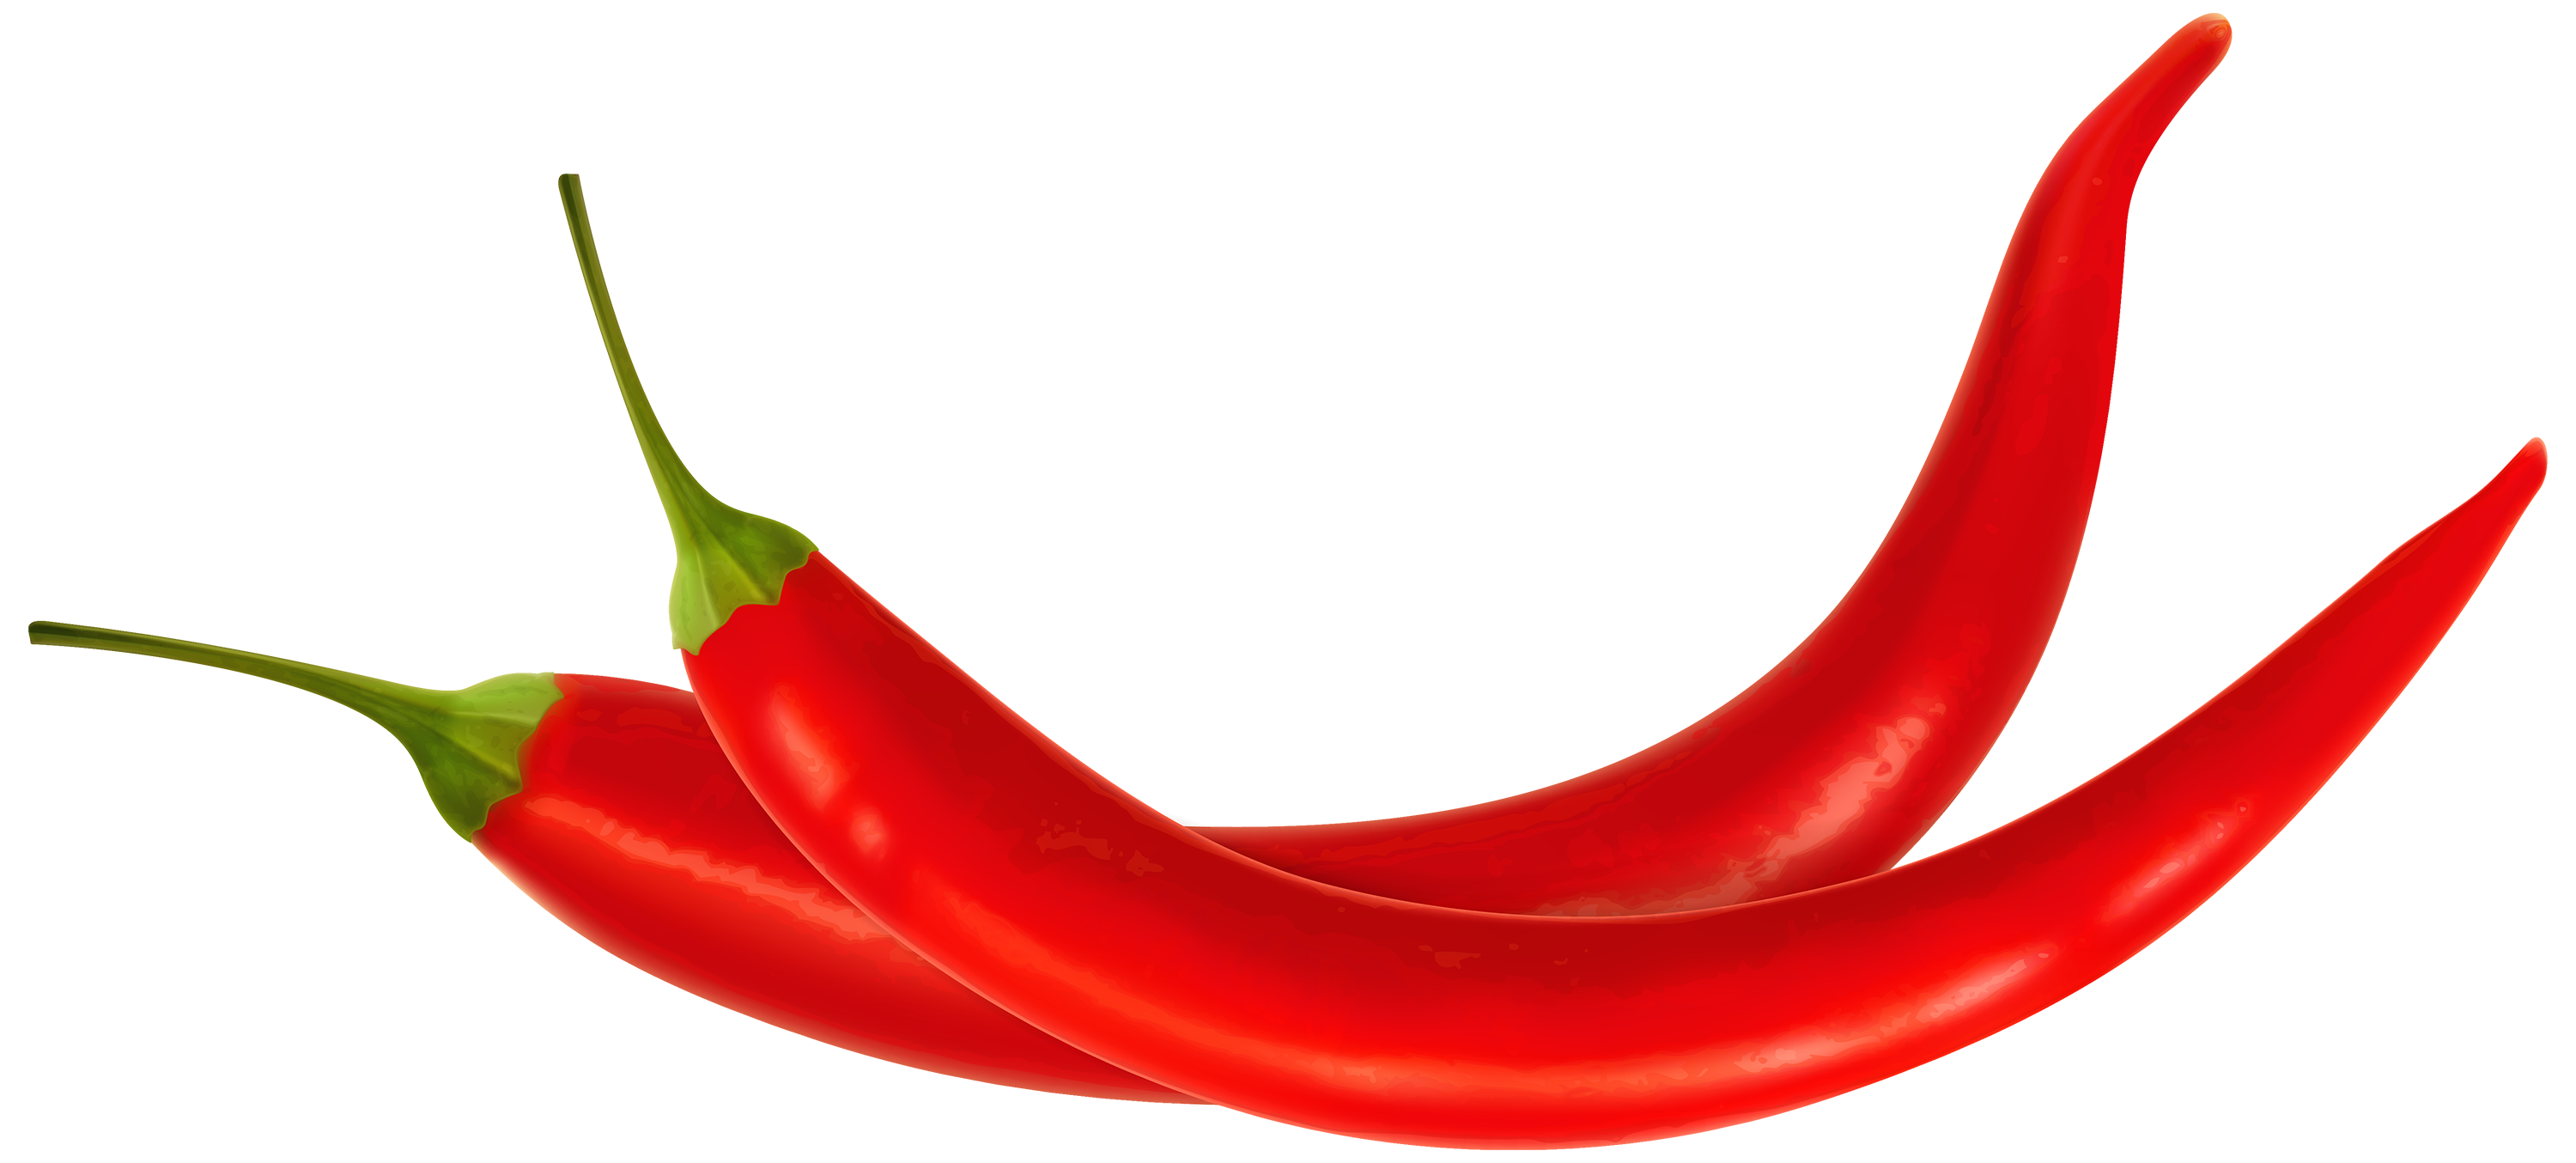 Chili pepper clipart free image